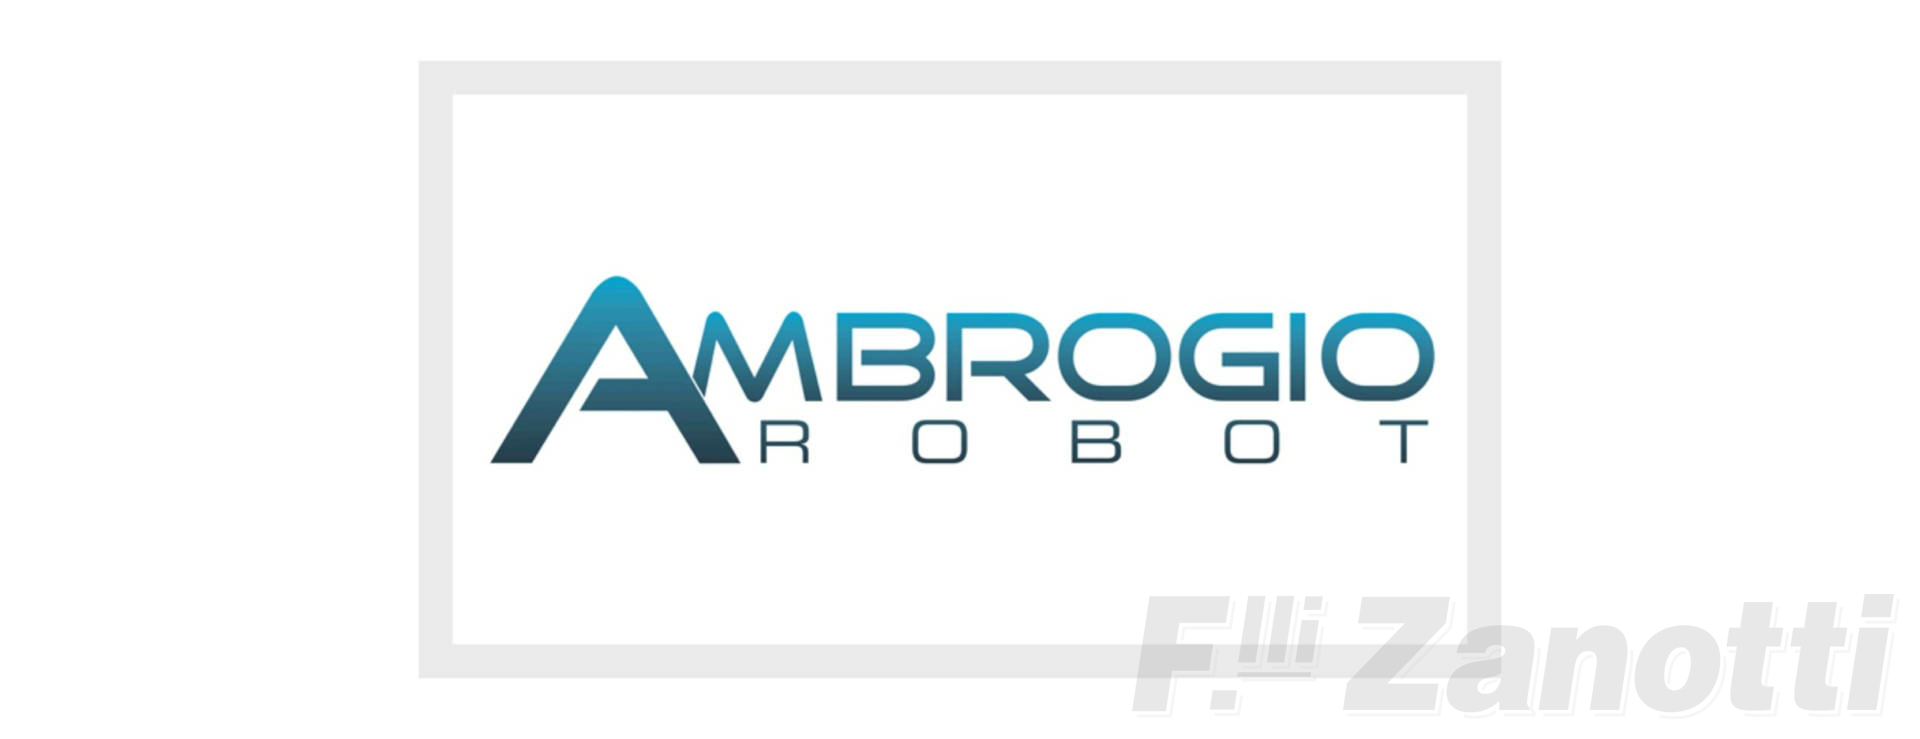 ambrogio-robot-scaled.jpg